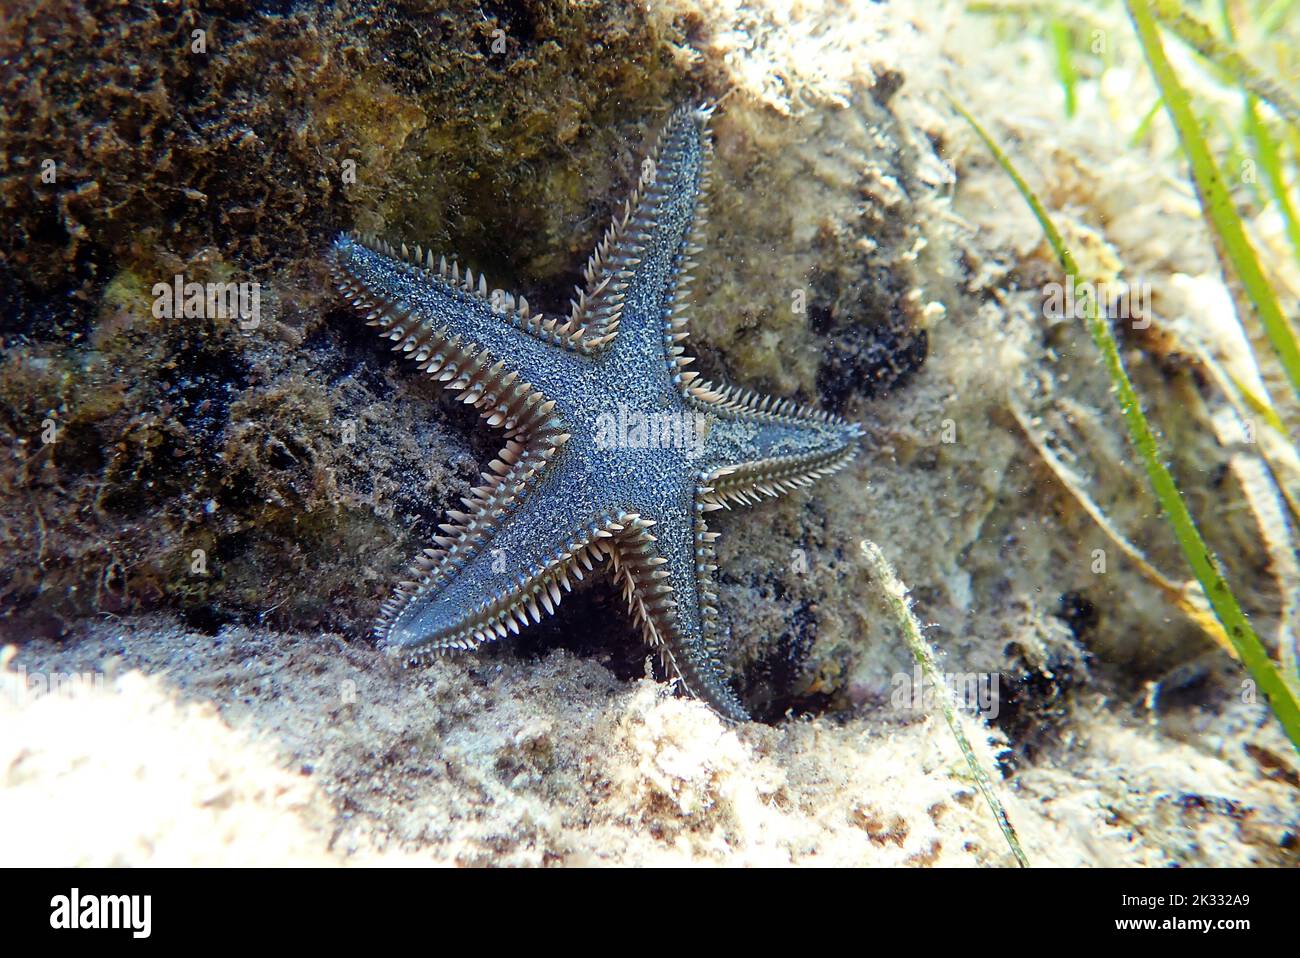 Underwater image of Mediterranean sand sea-star Stock Photo